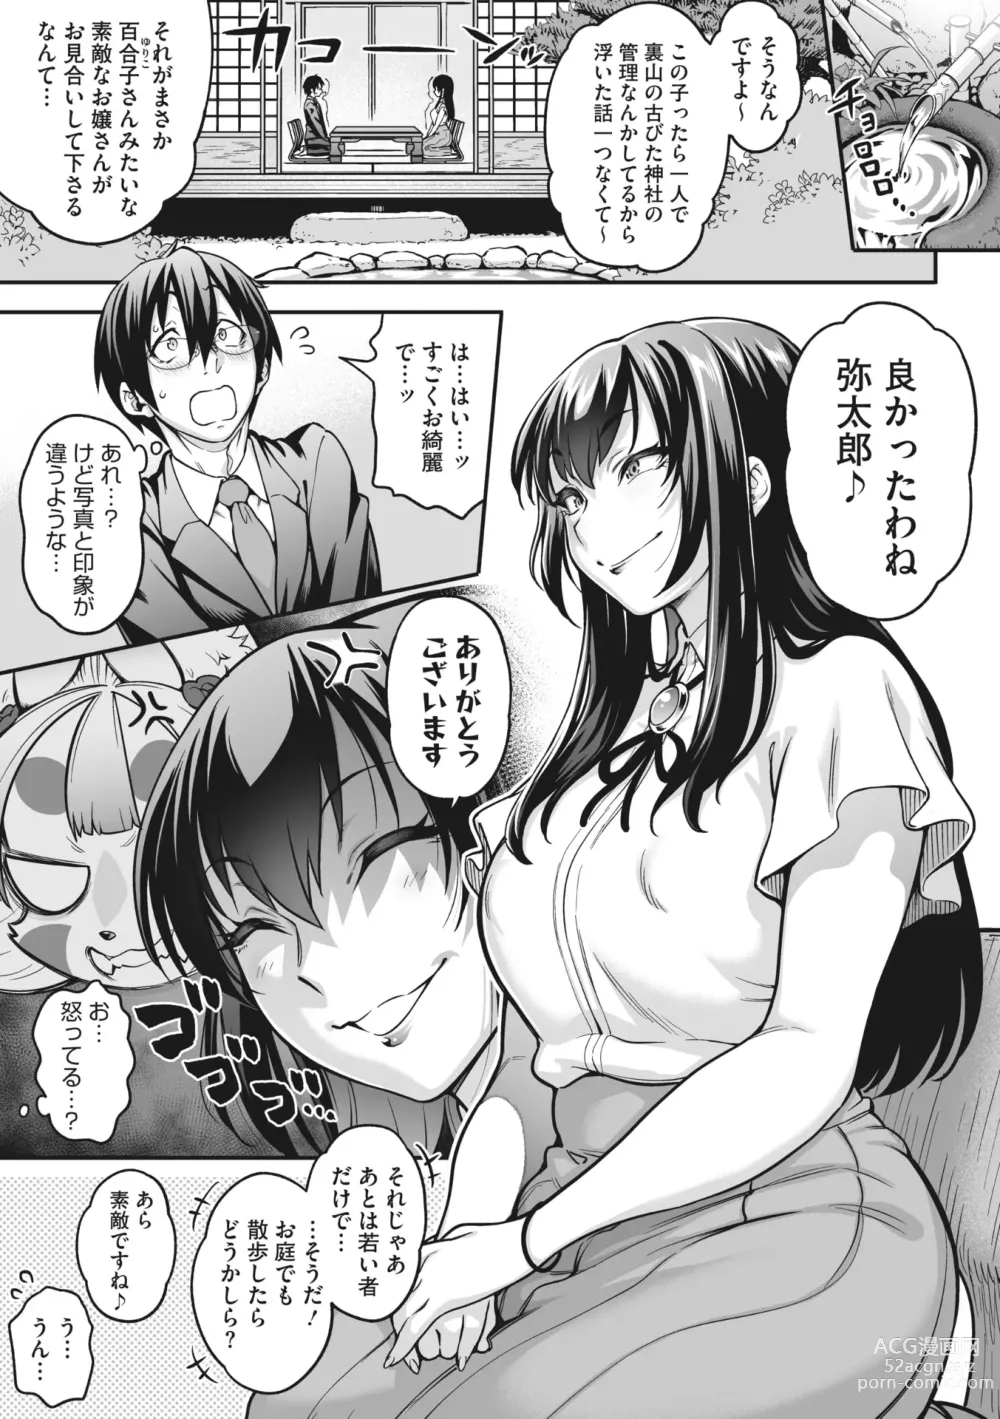 Page 7 of manga COMIC GAIRA Vol. 16